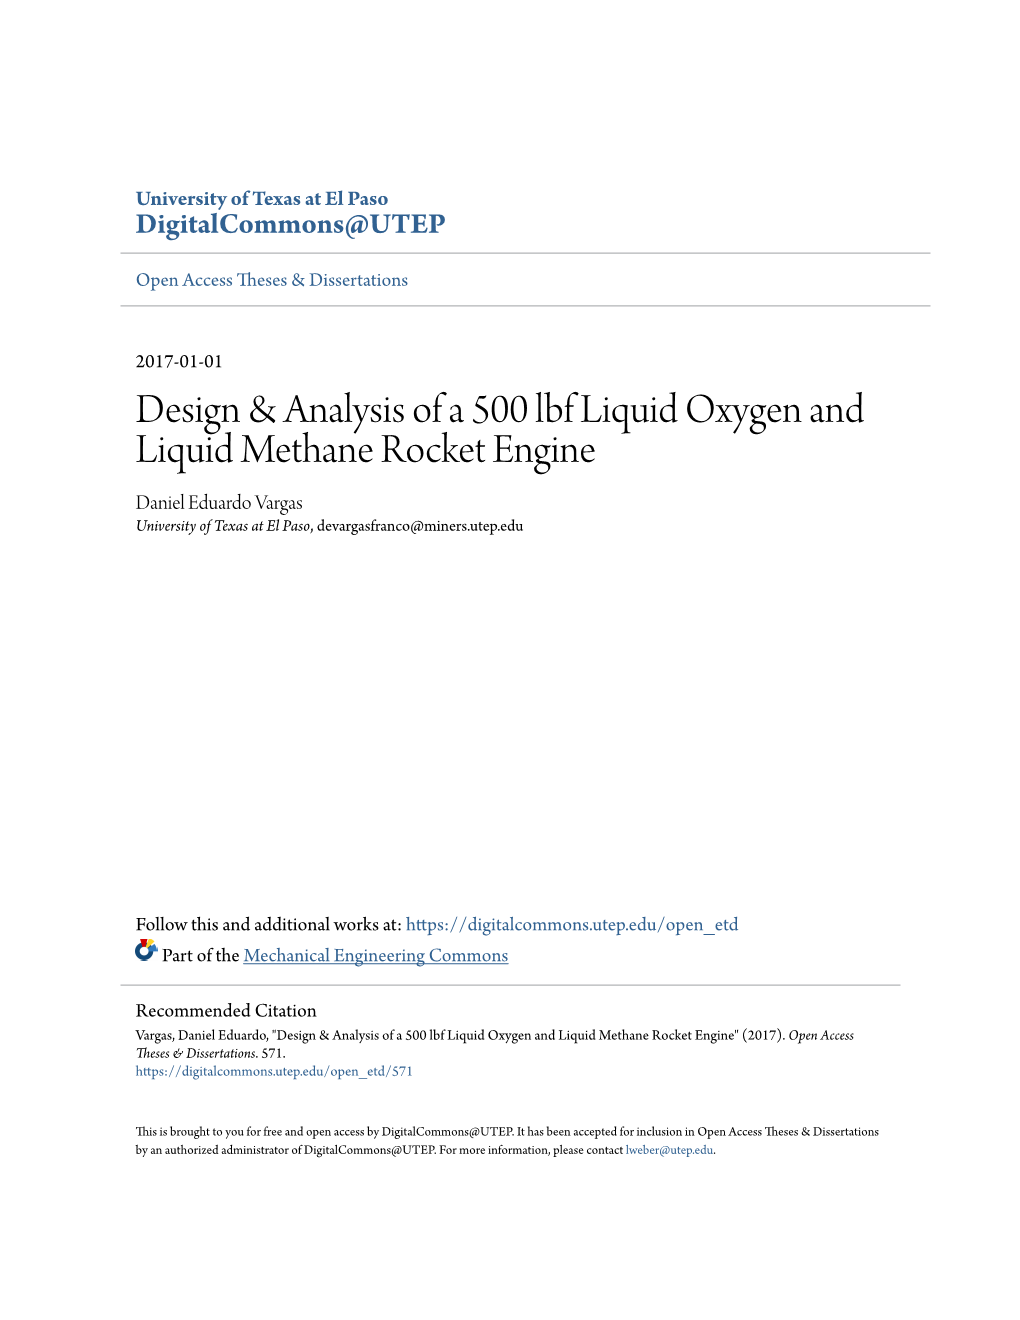 Design & Analysis of a 500 Lbf Liquid Oxygen and Liquid Methane Rocket